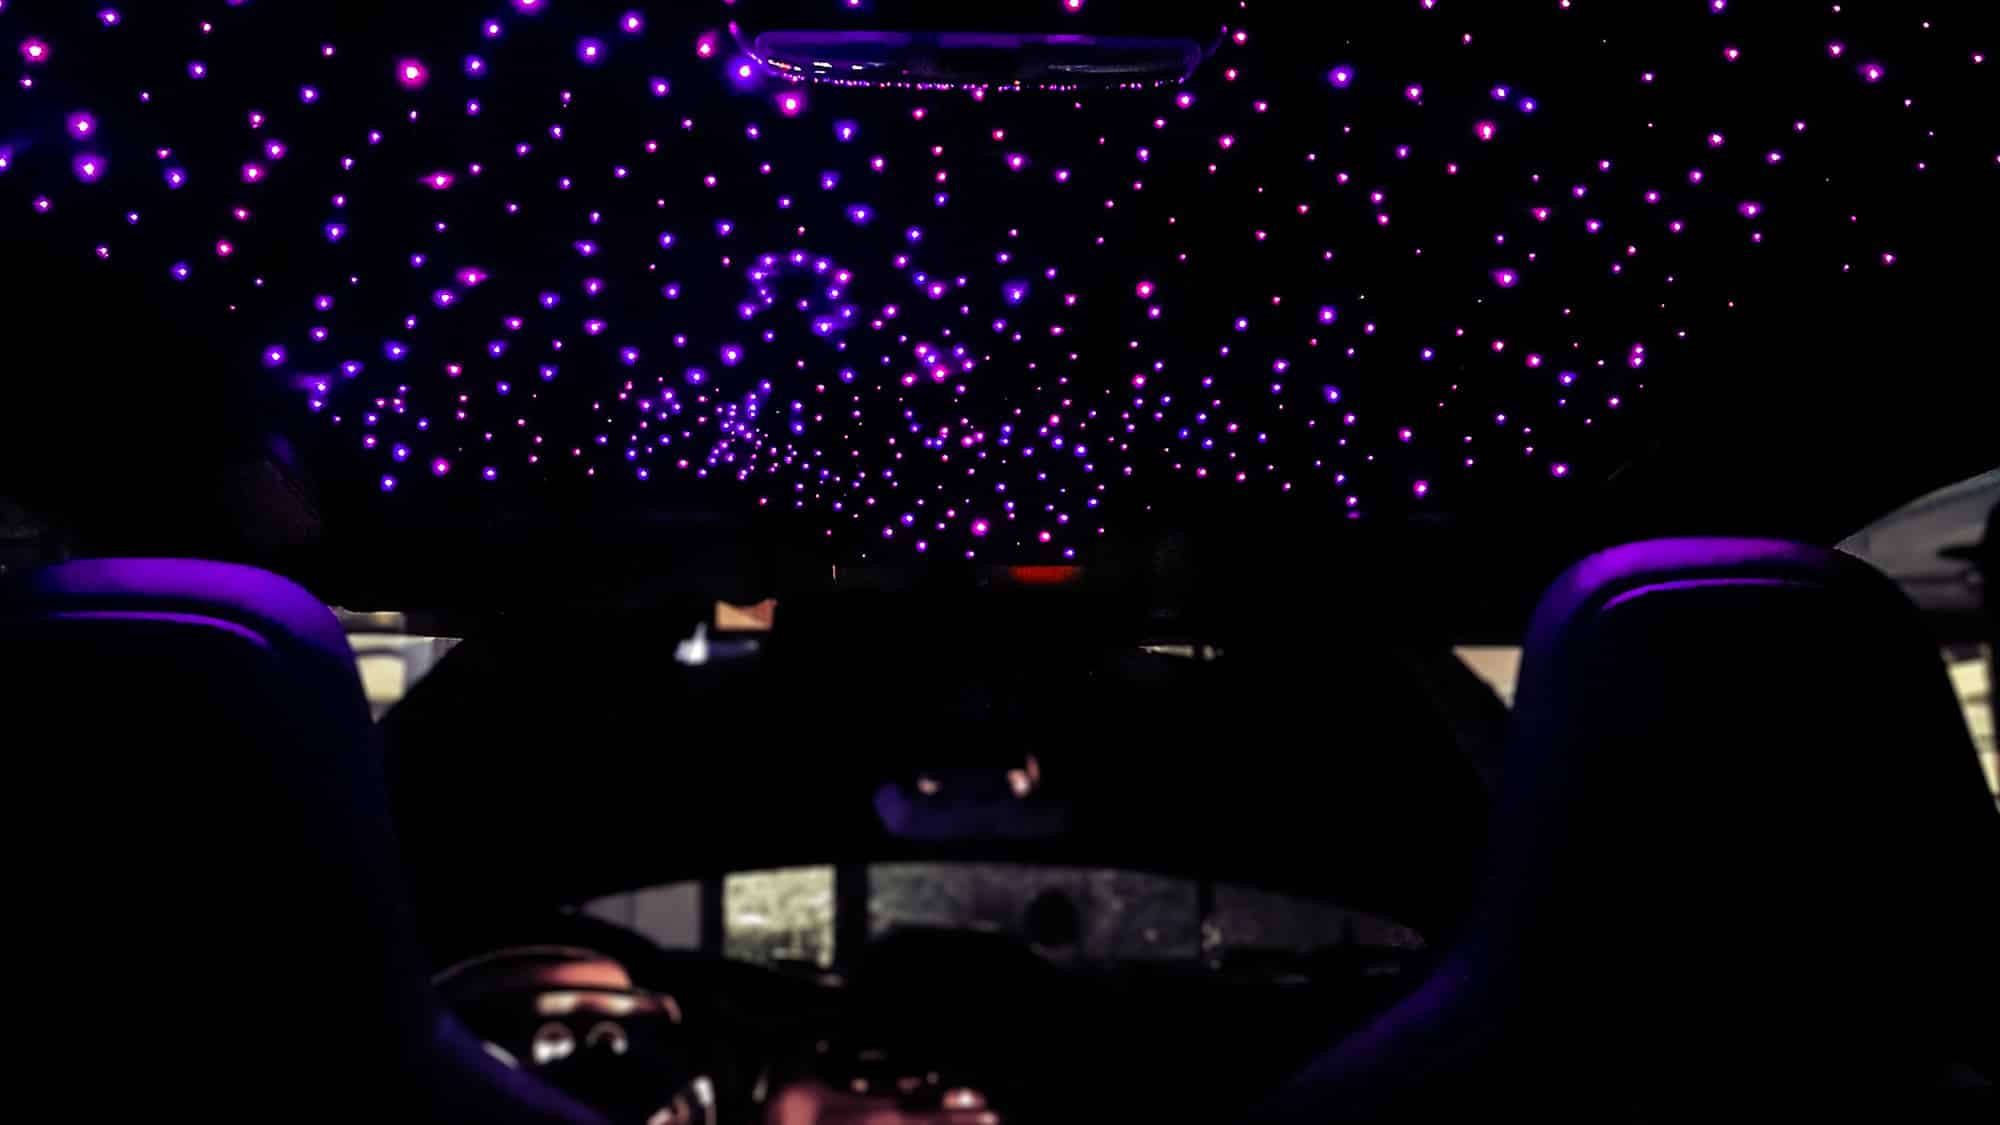 Auto Sternenhimmel LED   BIGHA Folierung